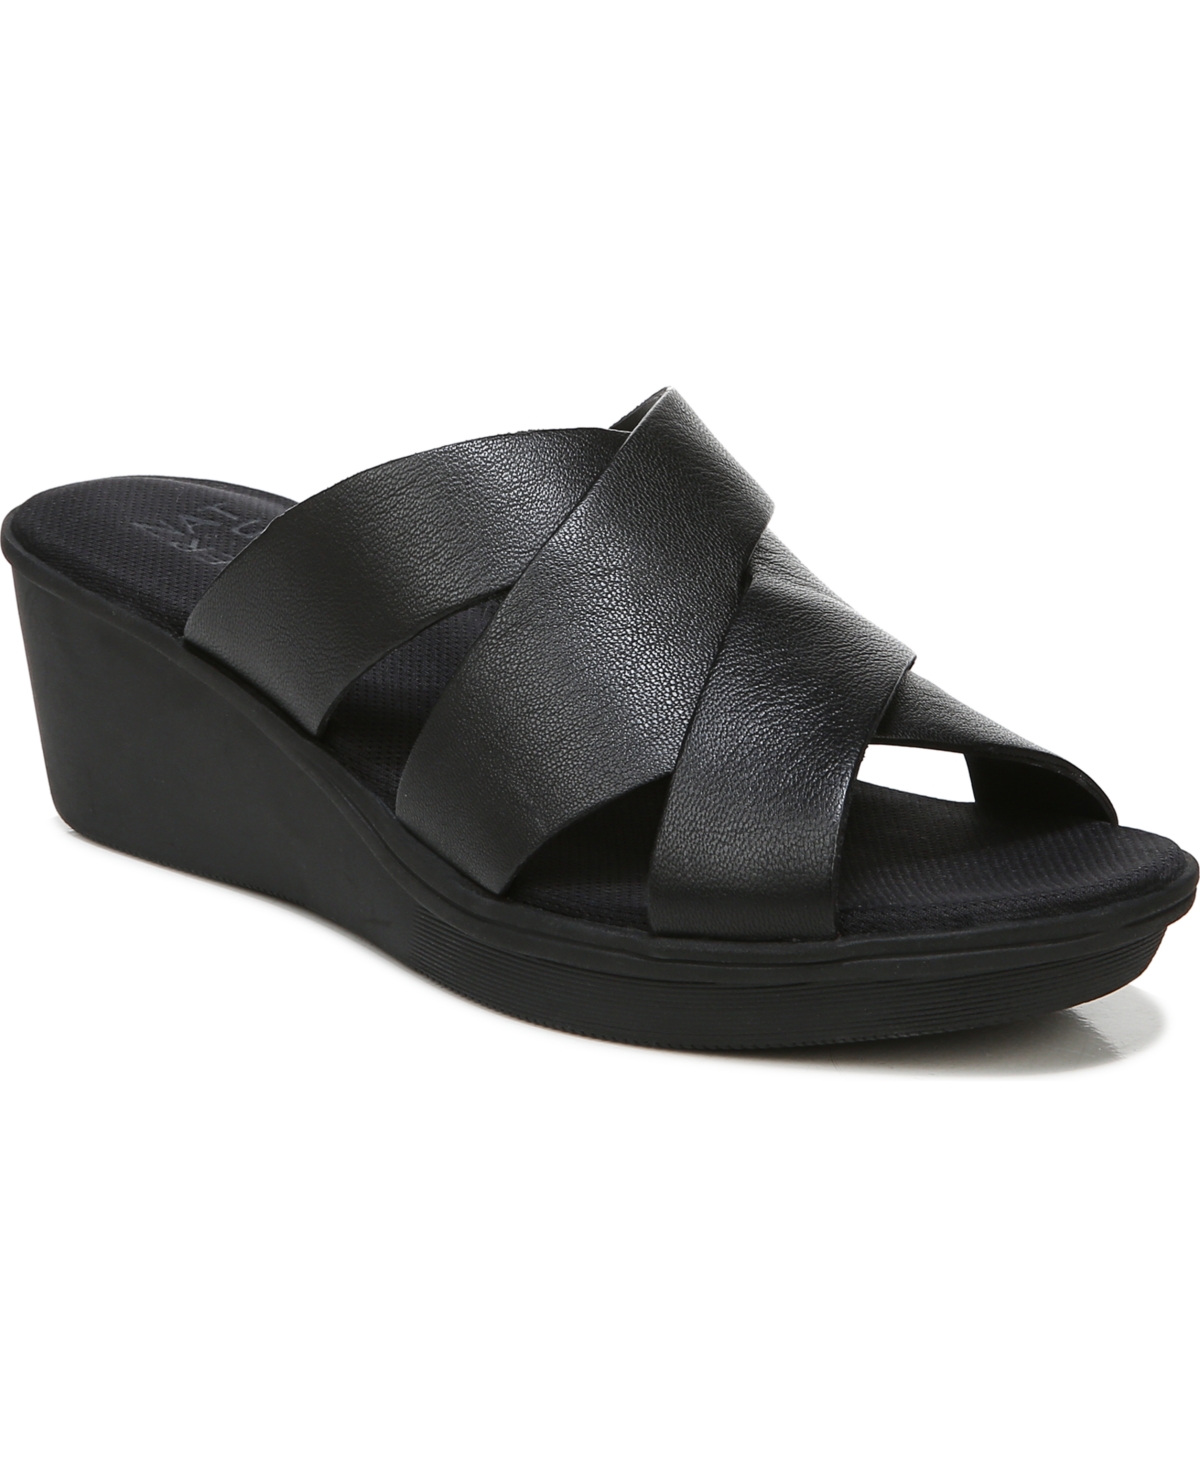 Rowena Slide Wedge Sandals - Black Leather